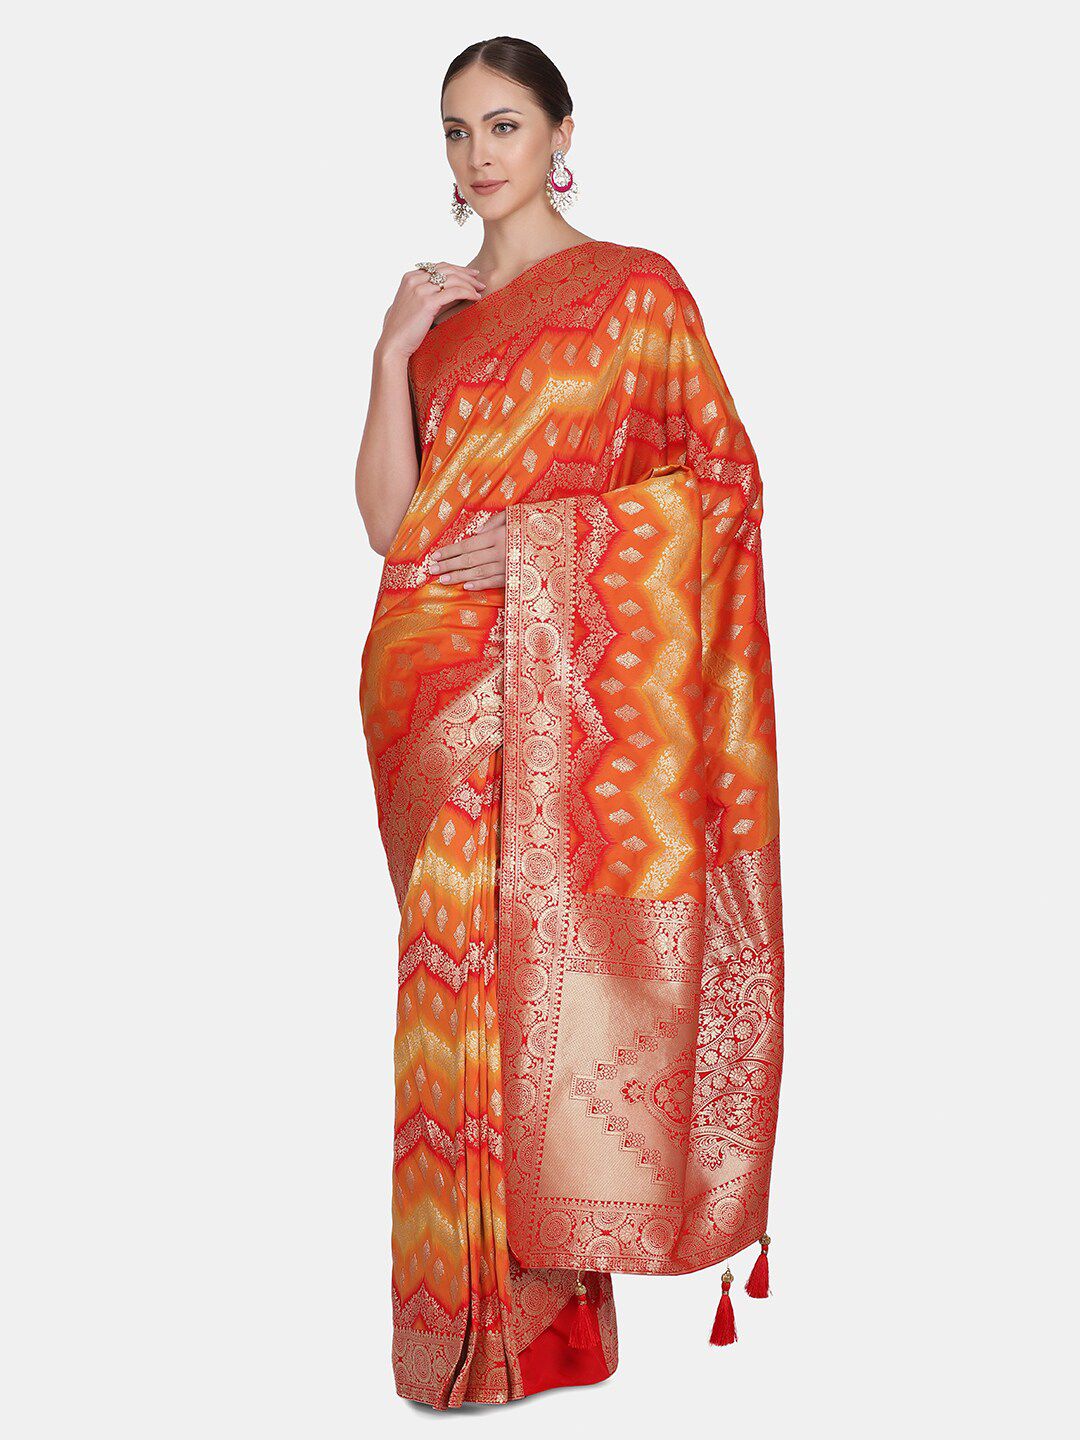 BOMBAY SELECTIONS Orange & Red Floral Zari Art Silk Banarasi Saree Price in India